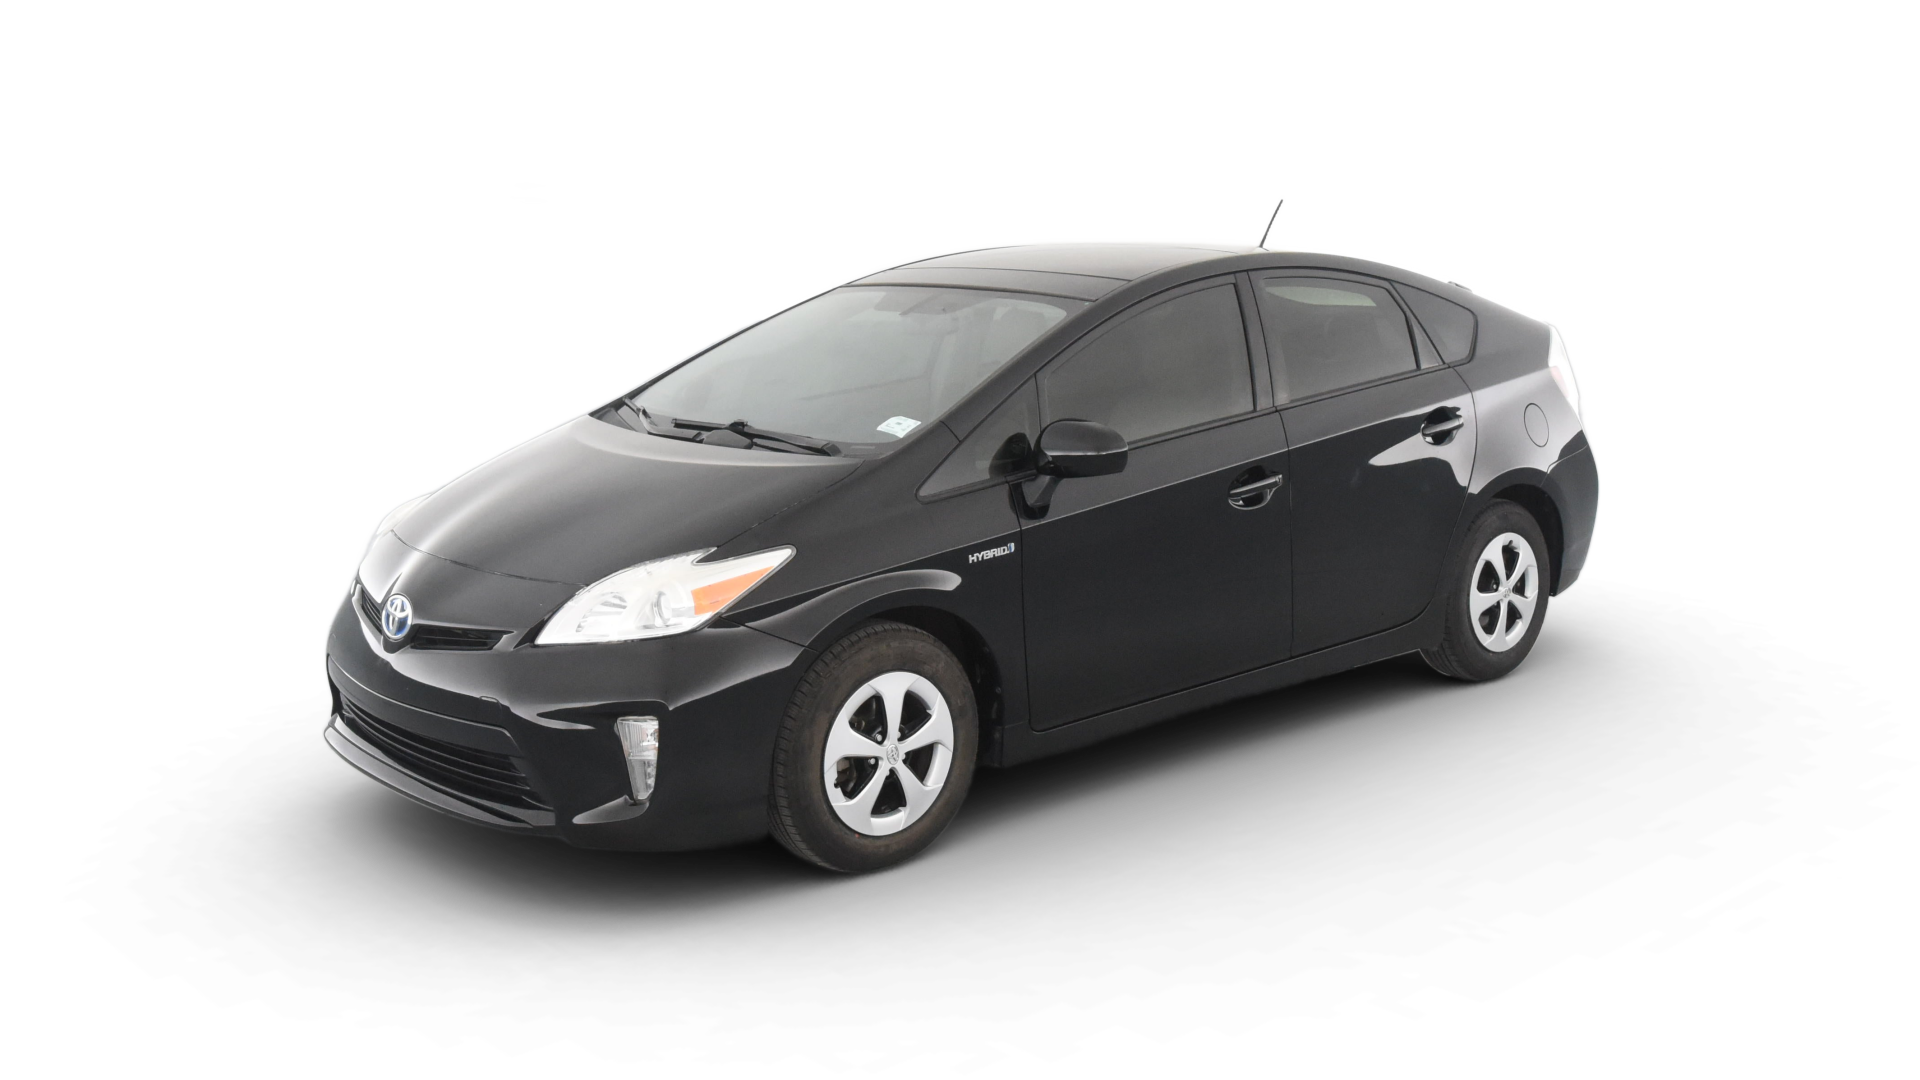 Toyota Prius model image.